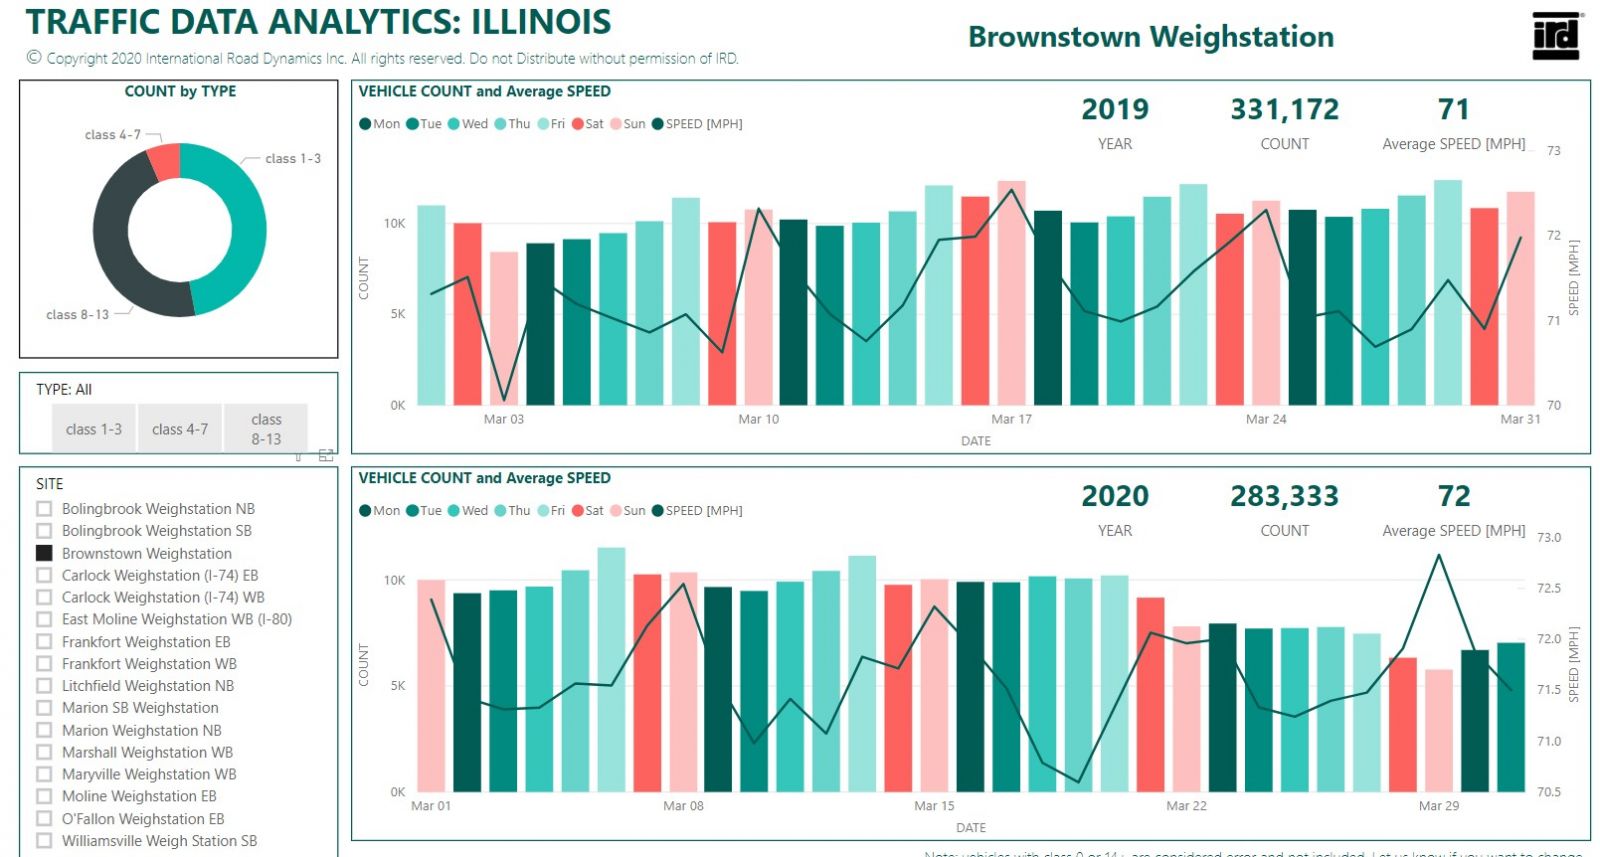 Illinois Traffic Data Analytics COVID-19